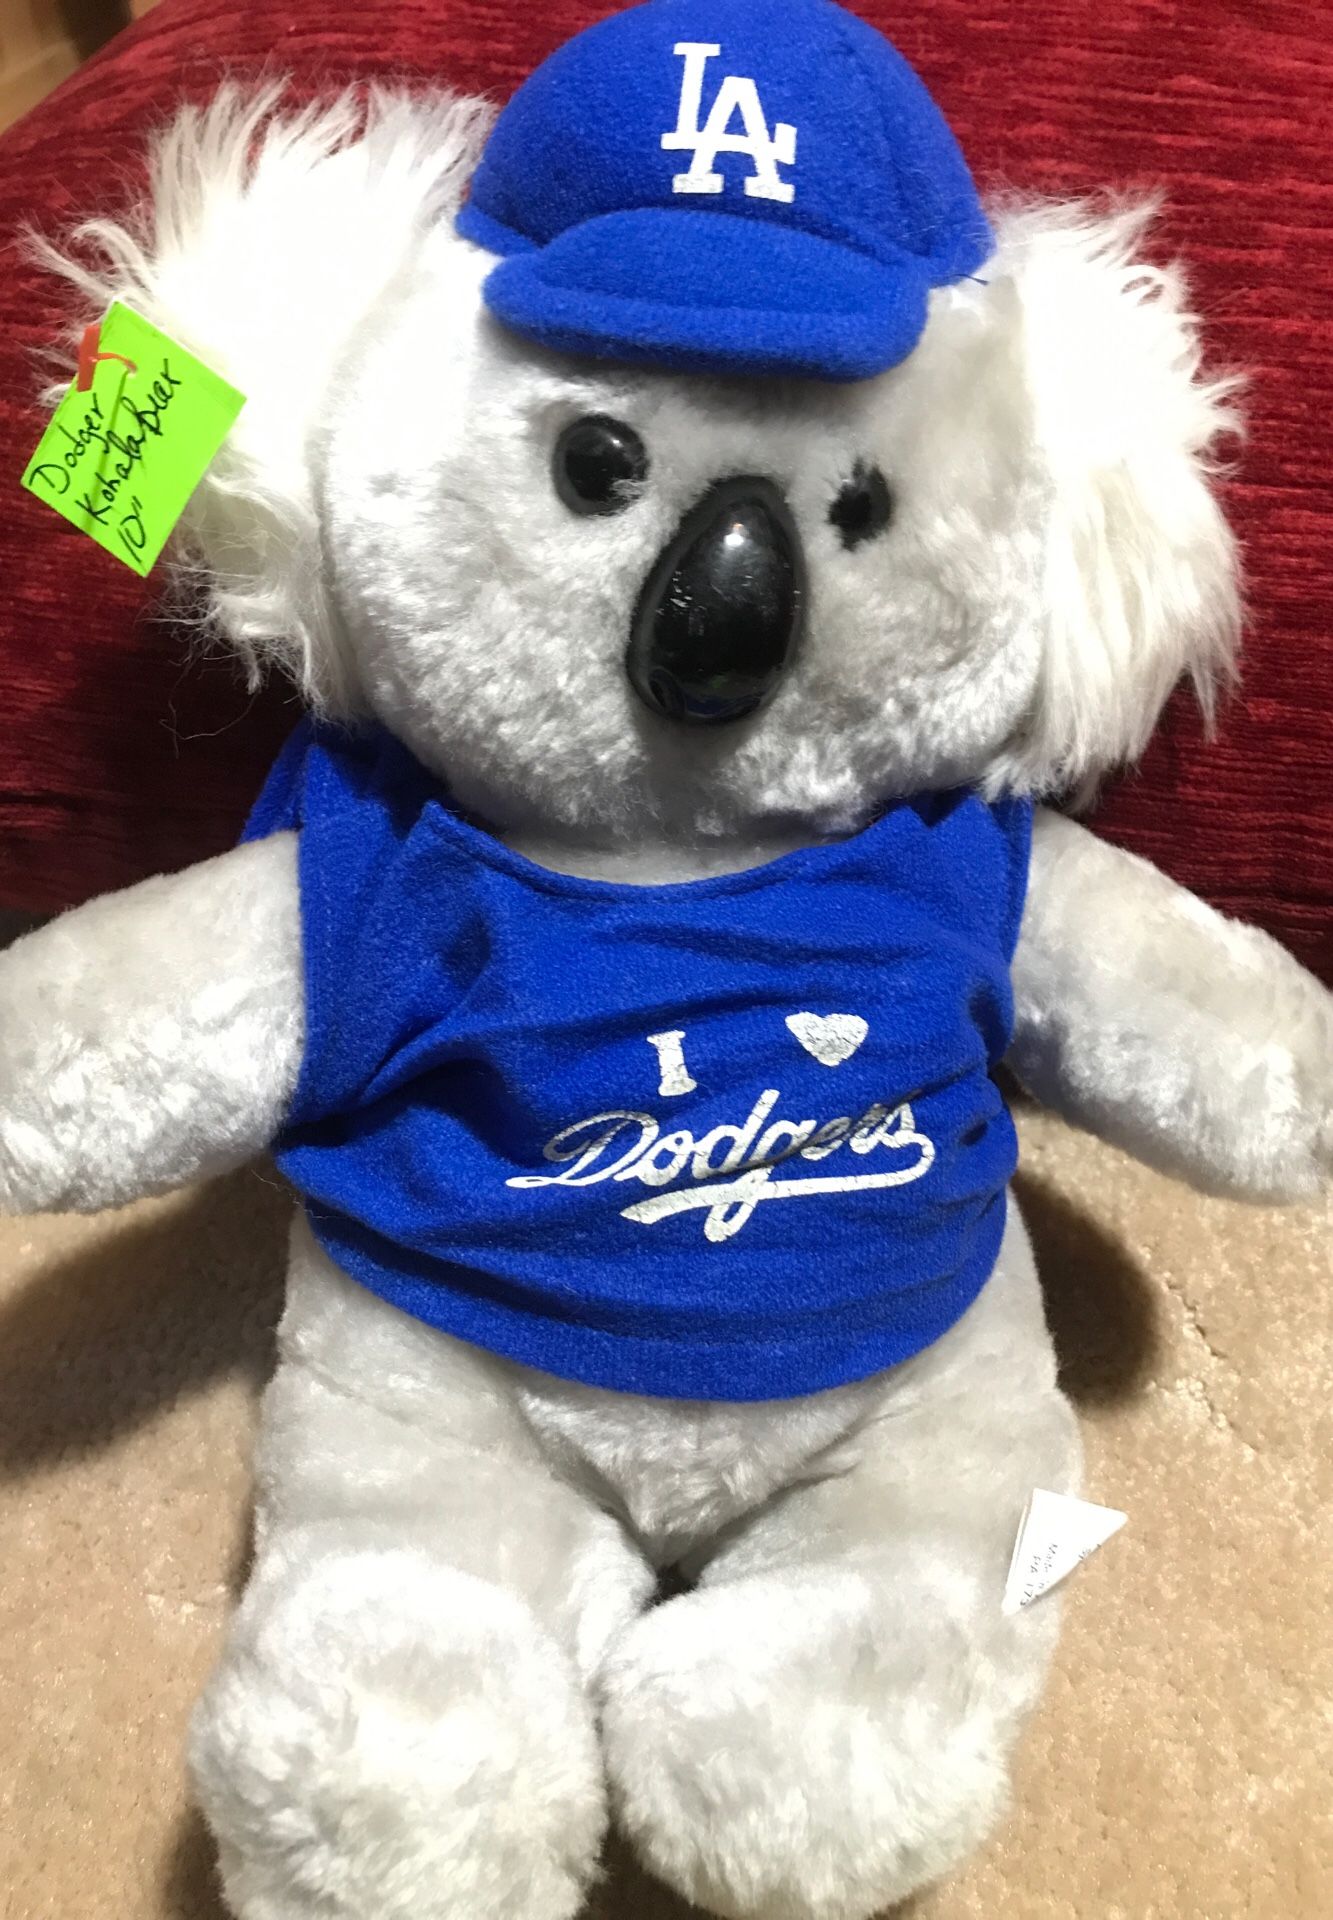 10” Dodger koala bear stuffed animal$7.00